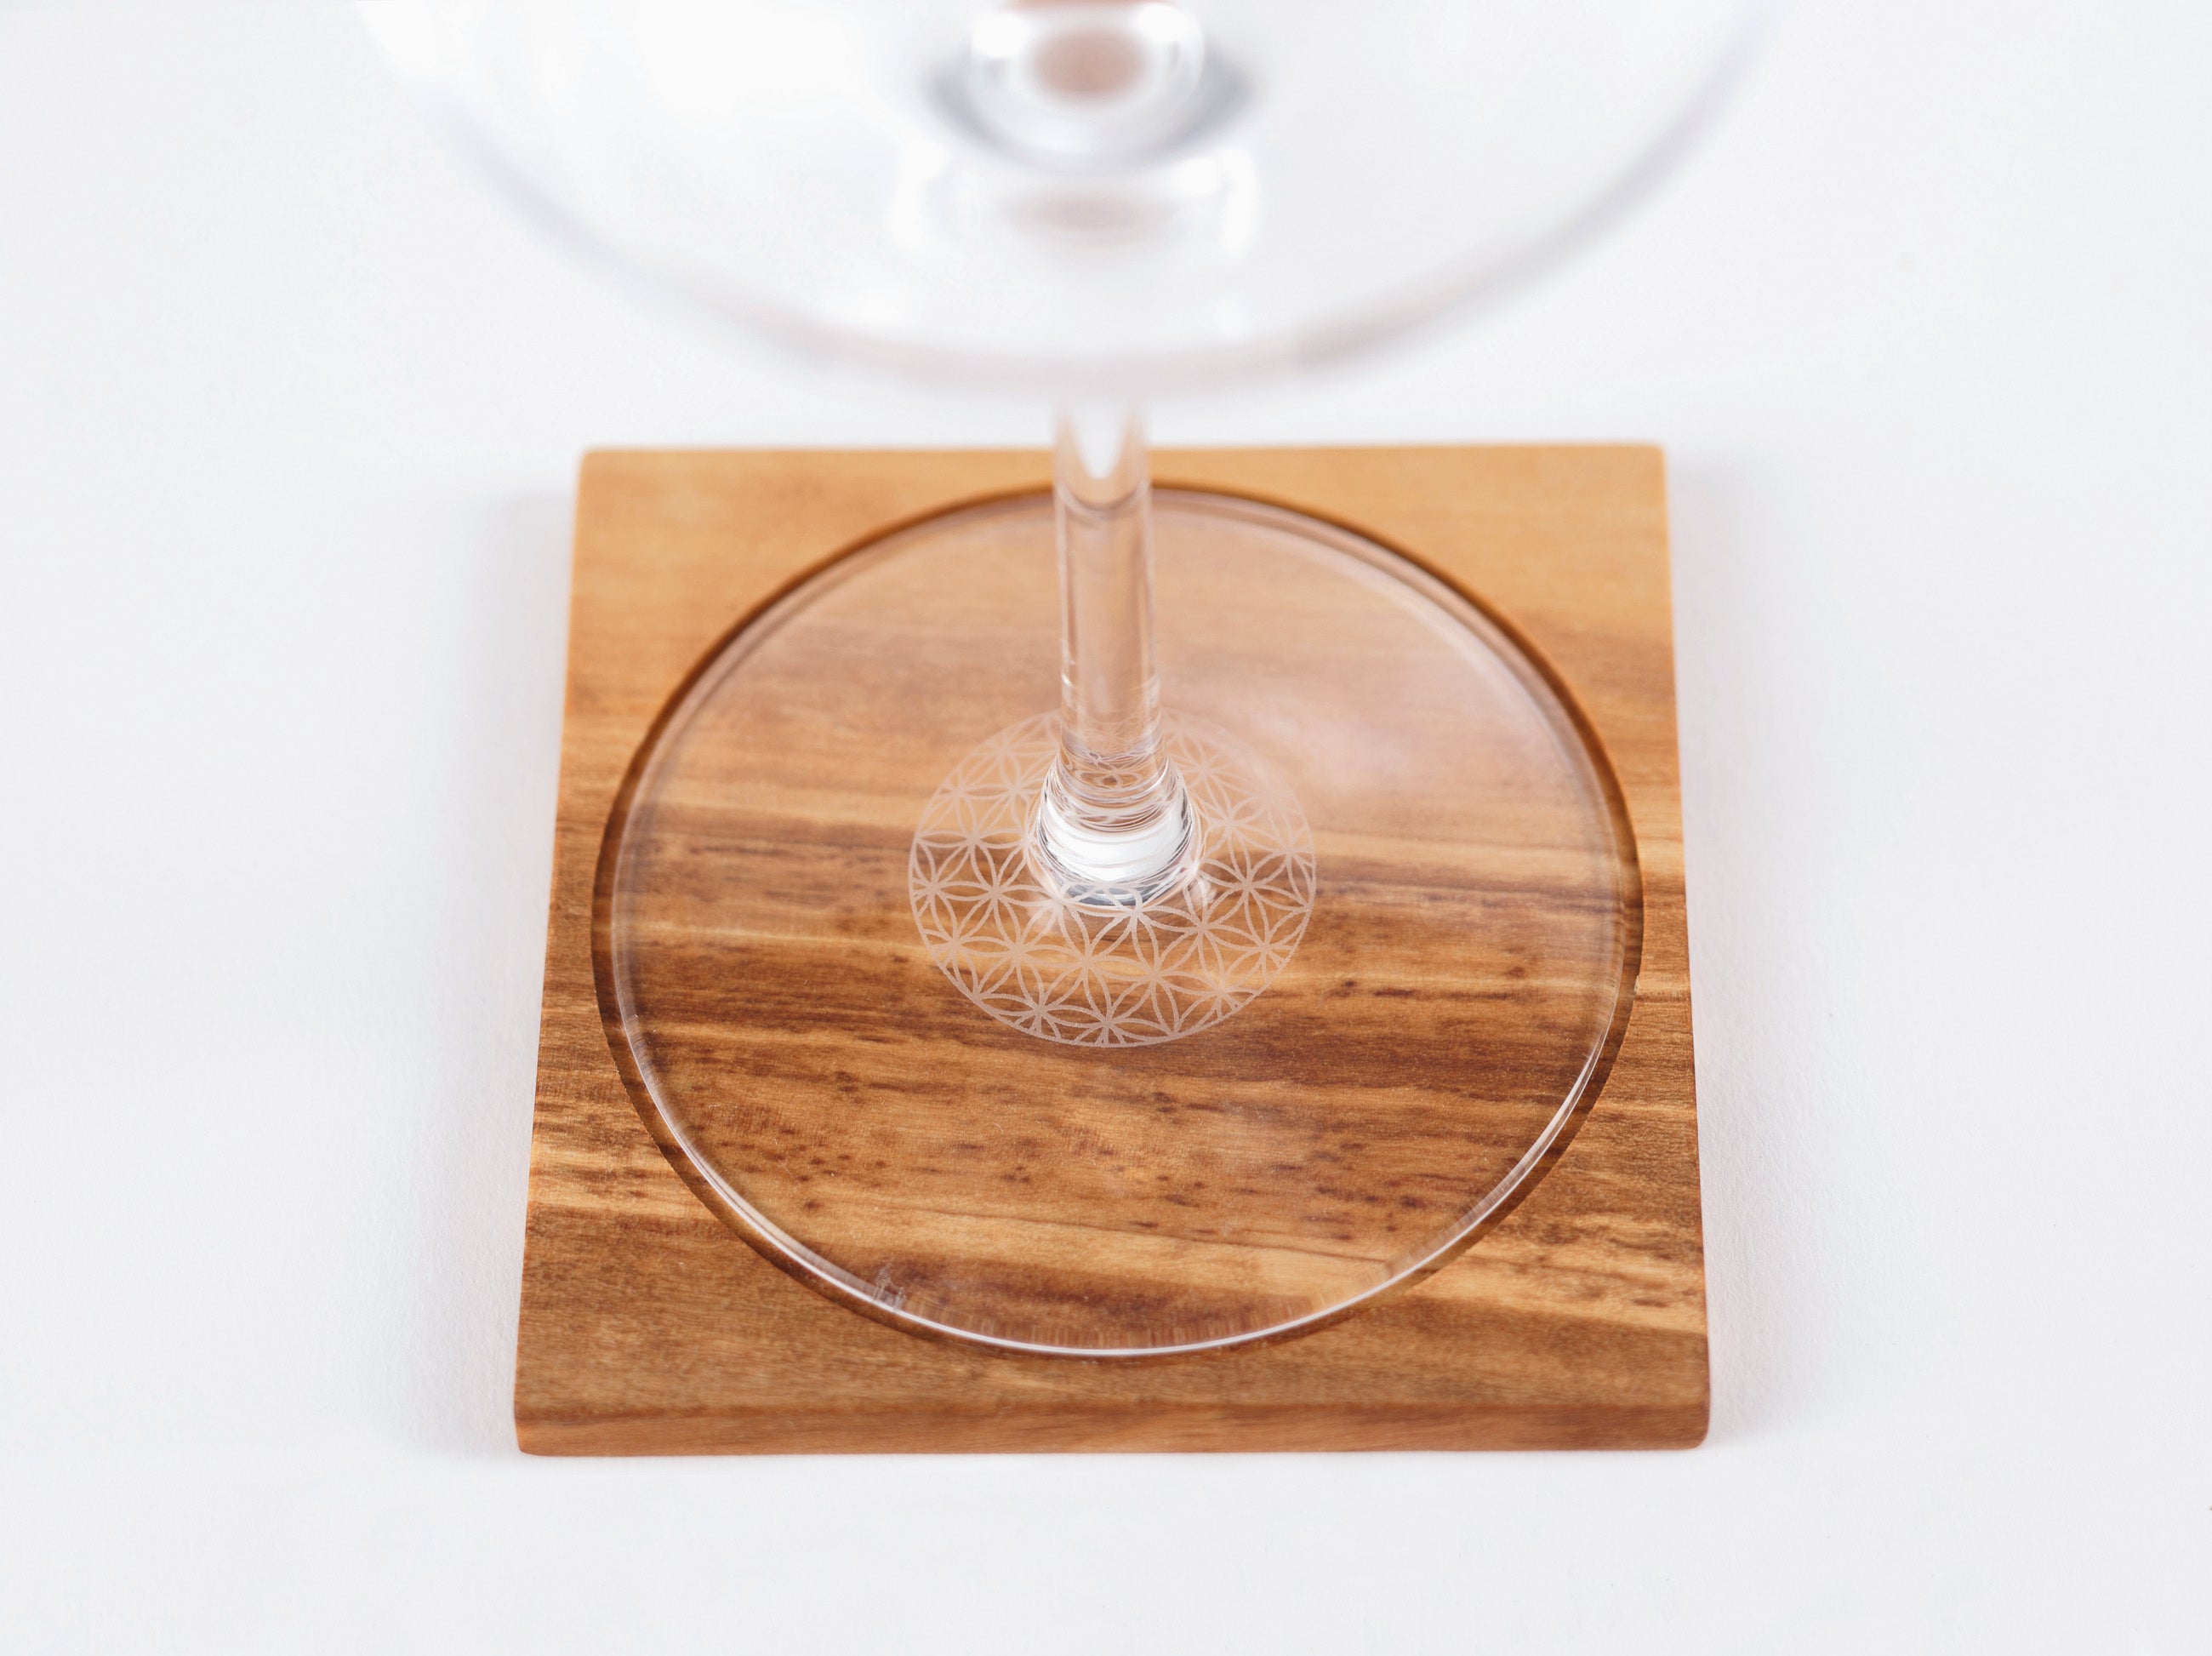 Calix Rotweinglas 0.5 l (mundgeblasen) mit BdL - BEPANO